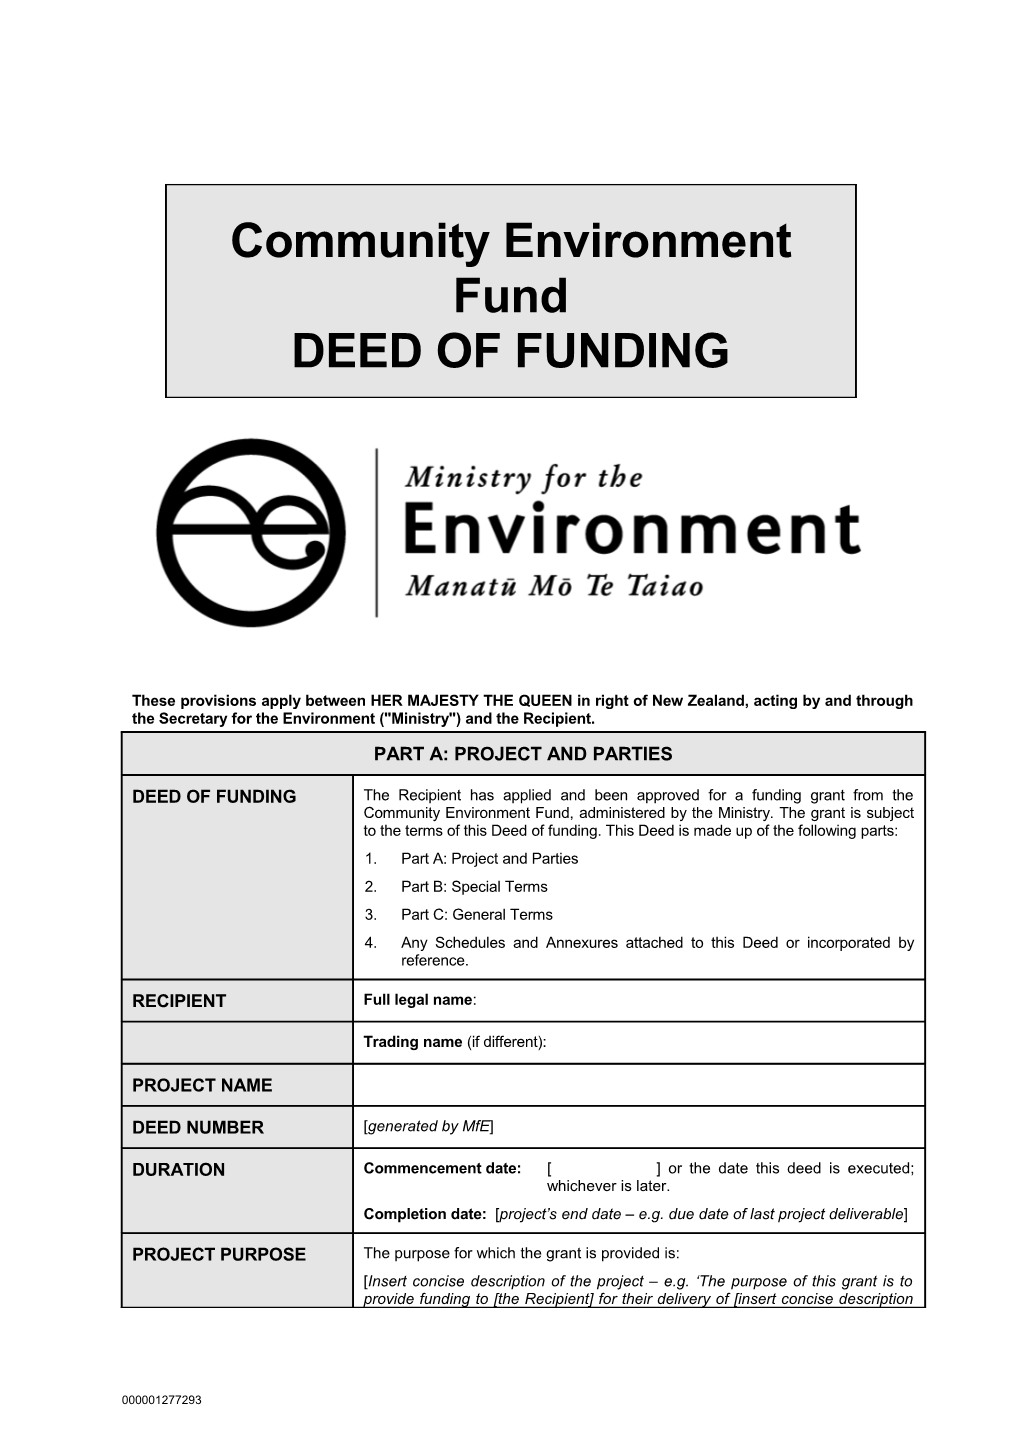 CEF - Deed of Funding Template